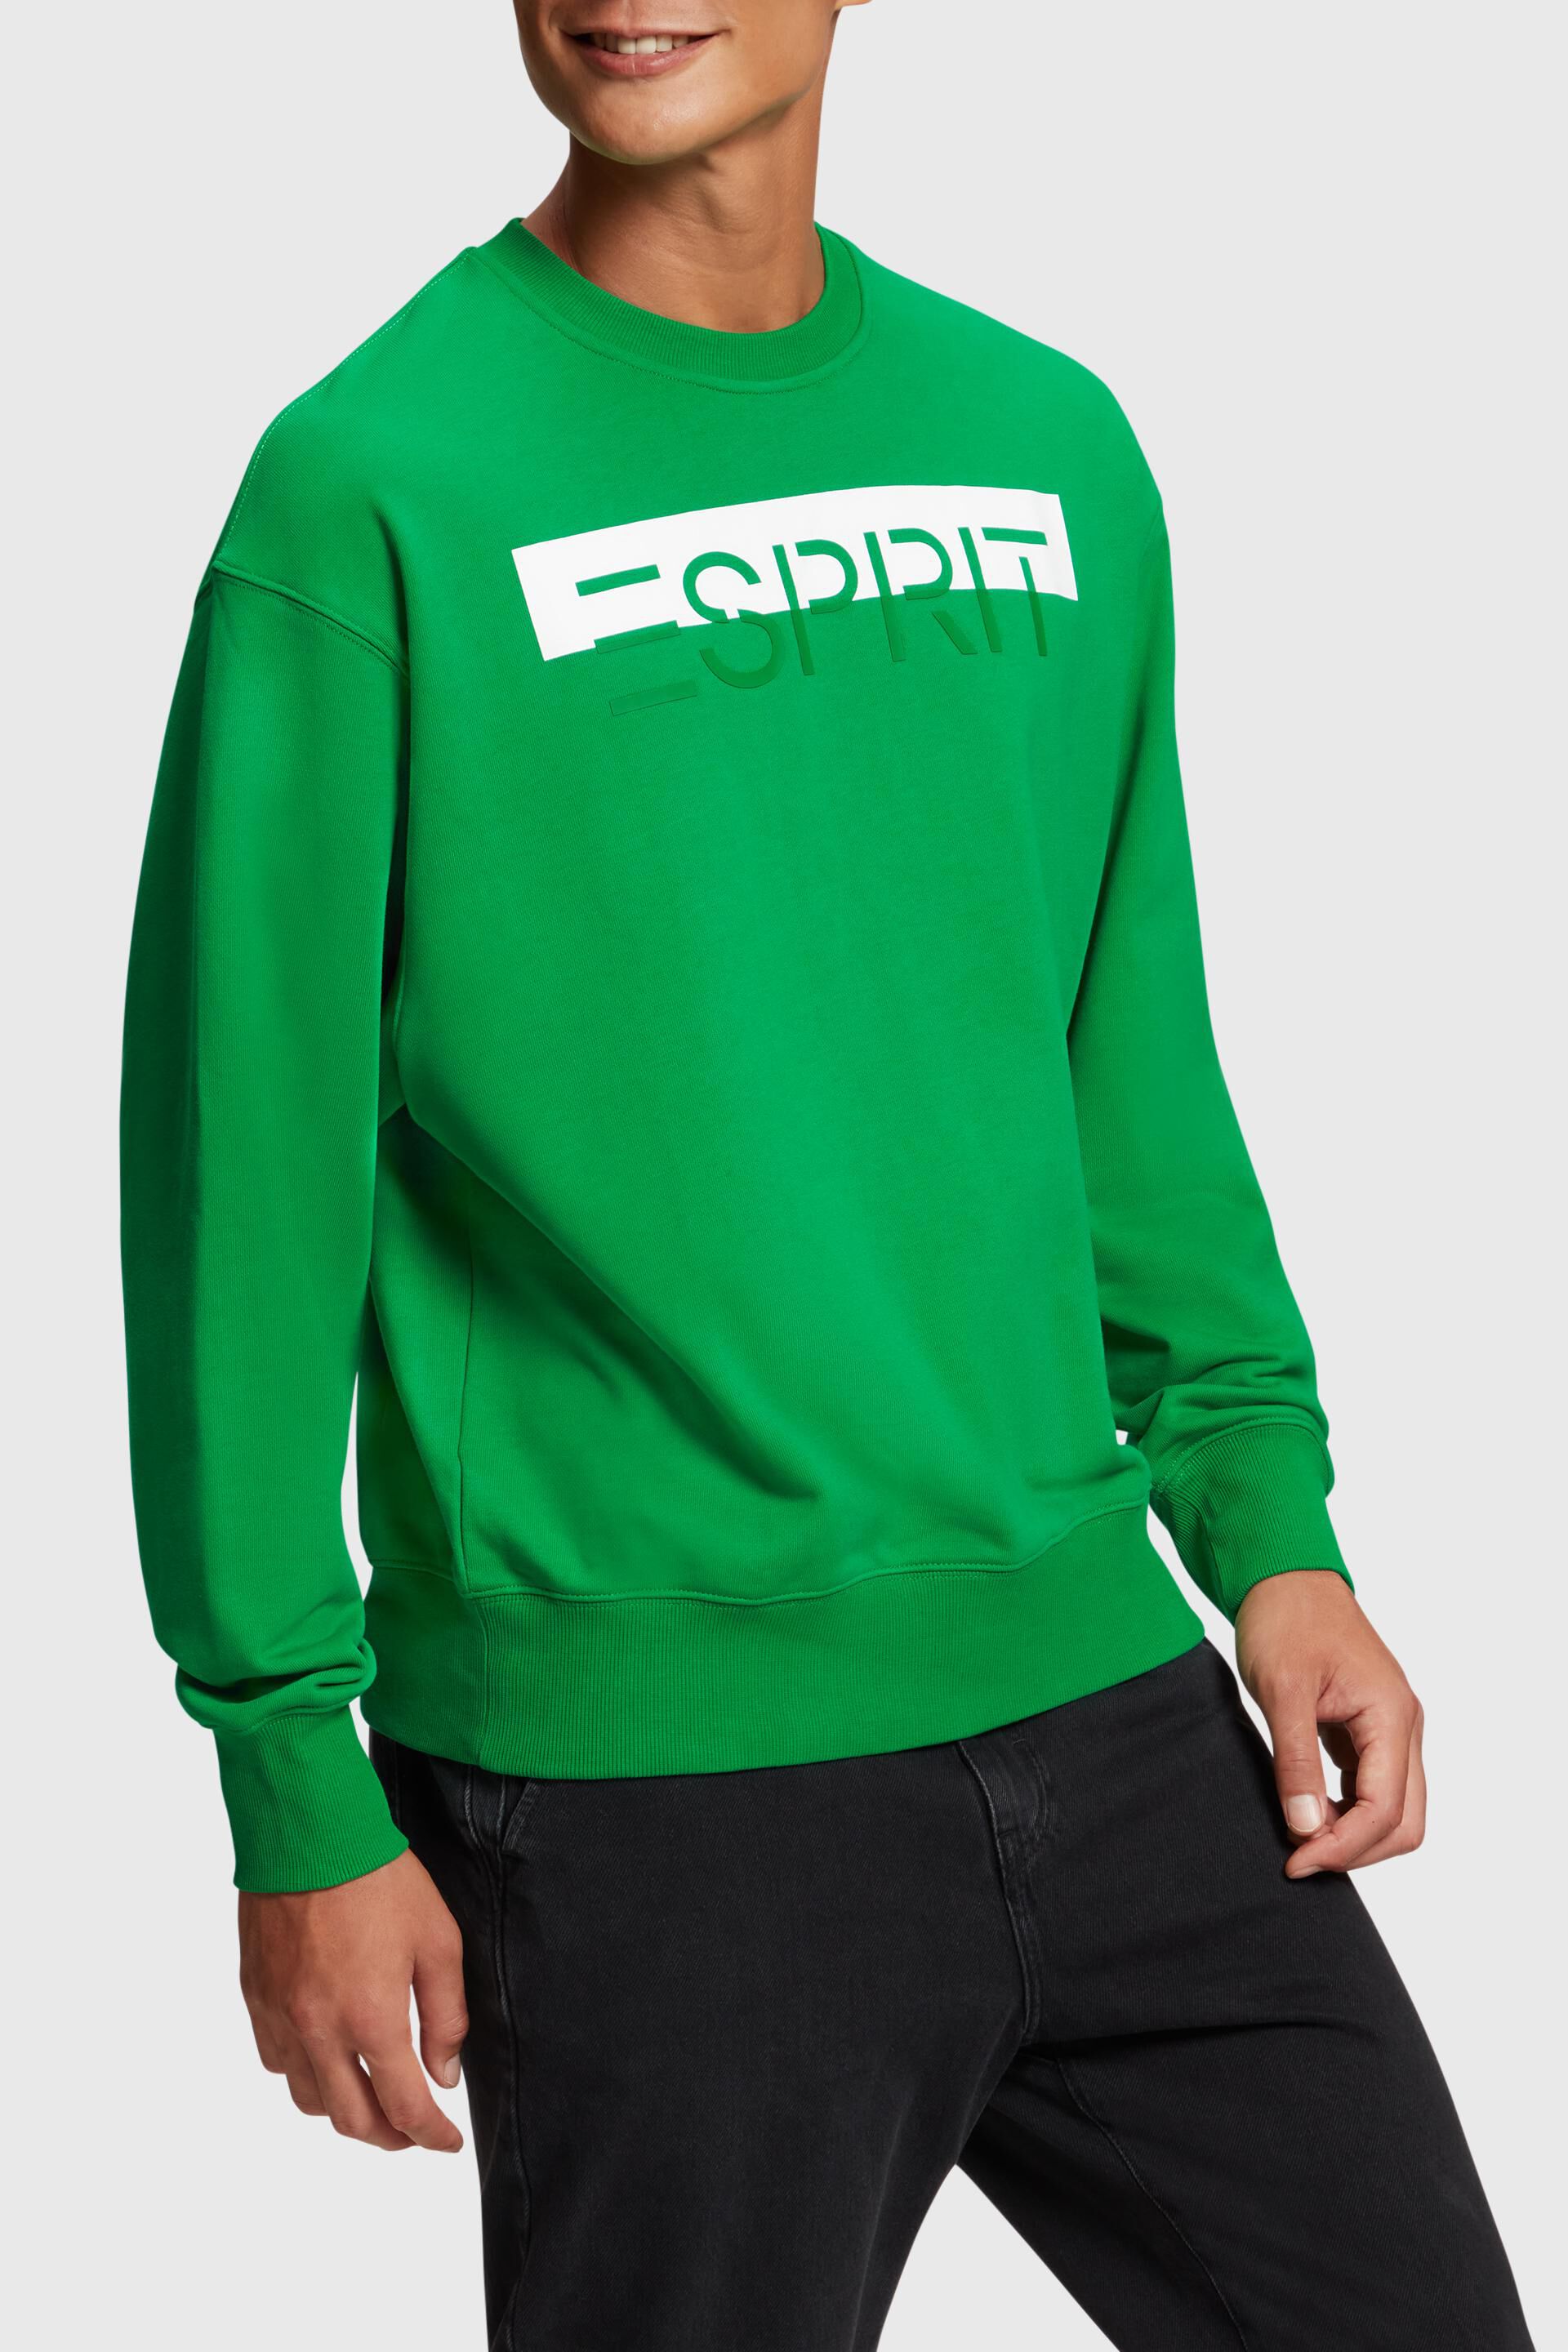 Esprit applique logo shine Matte sweatshirt